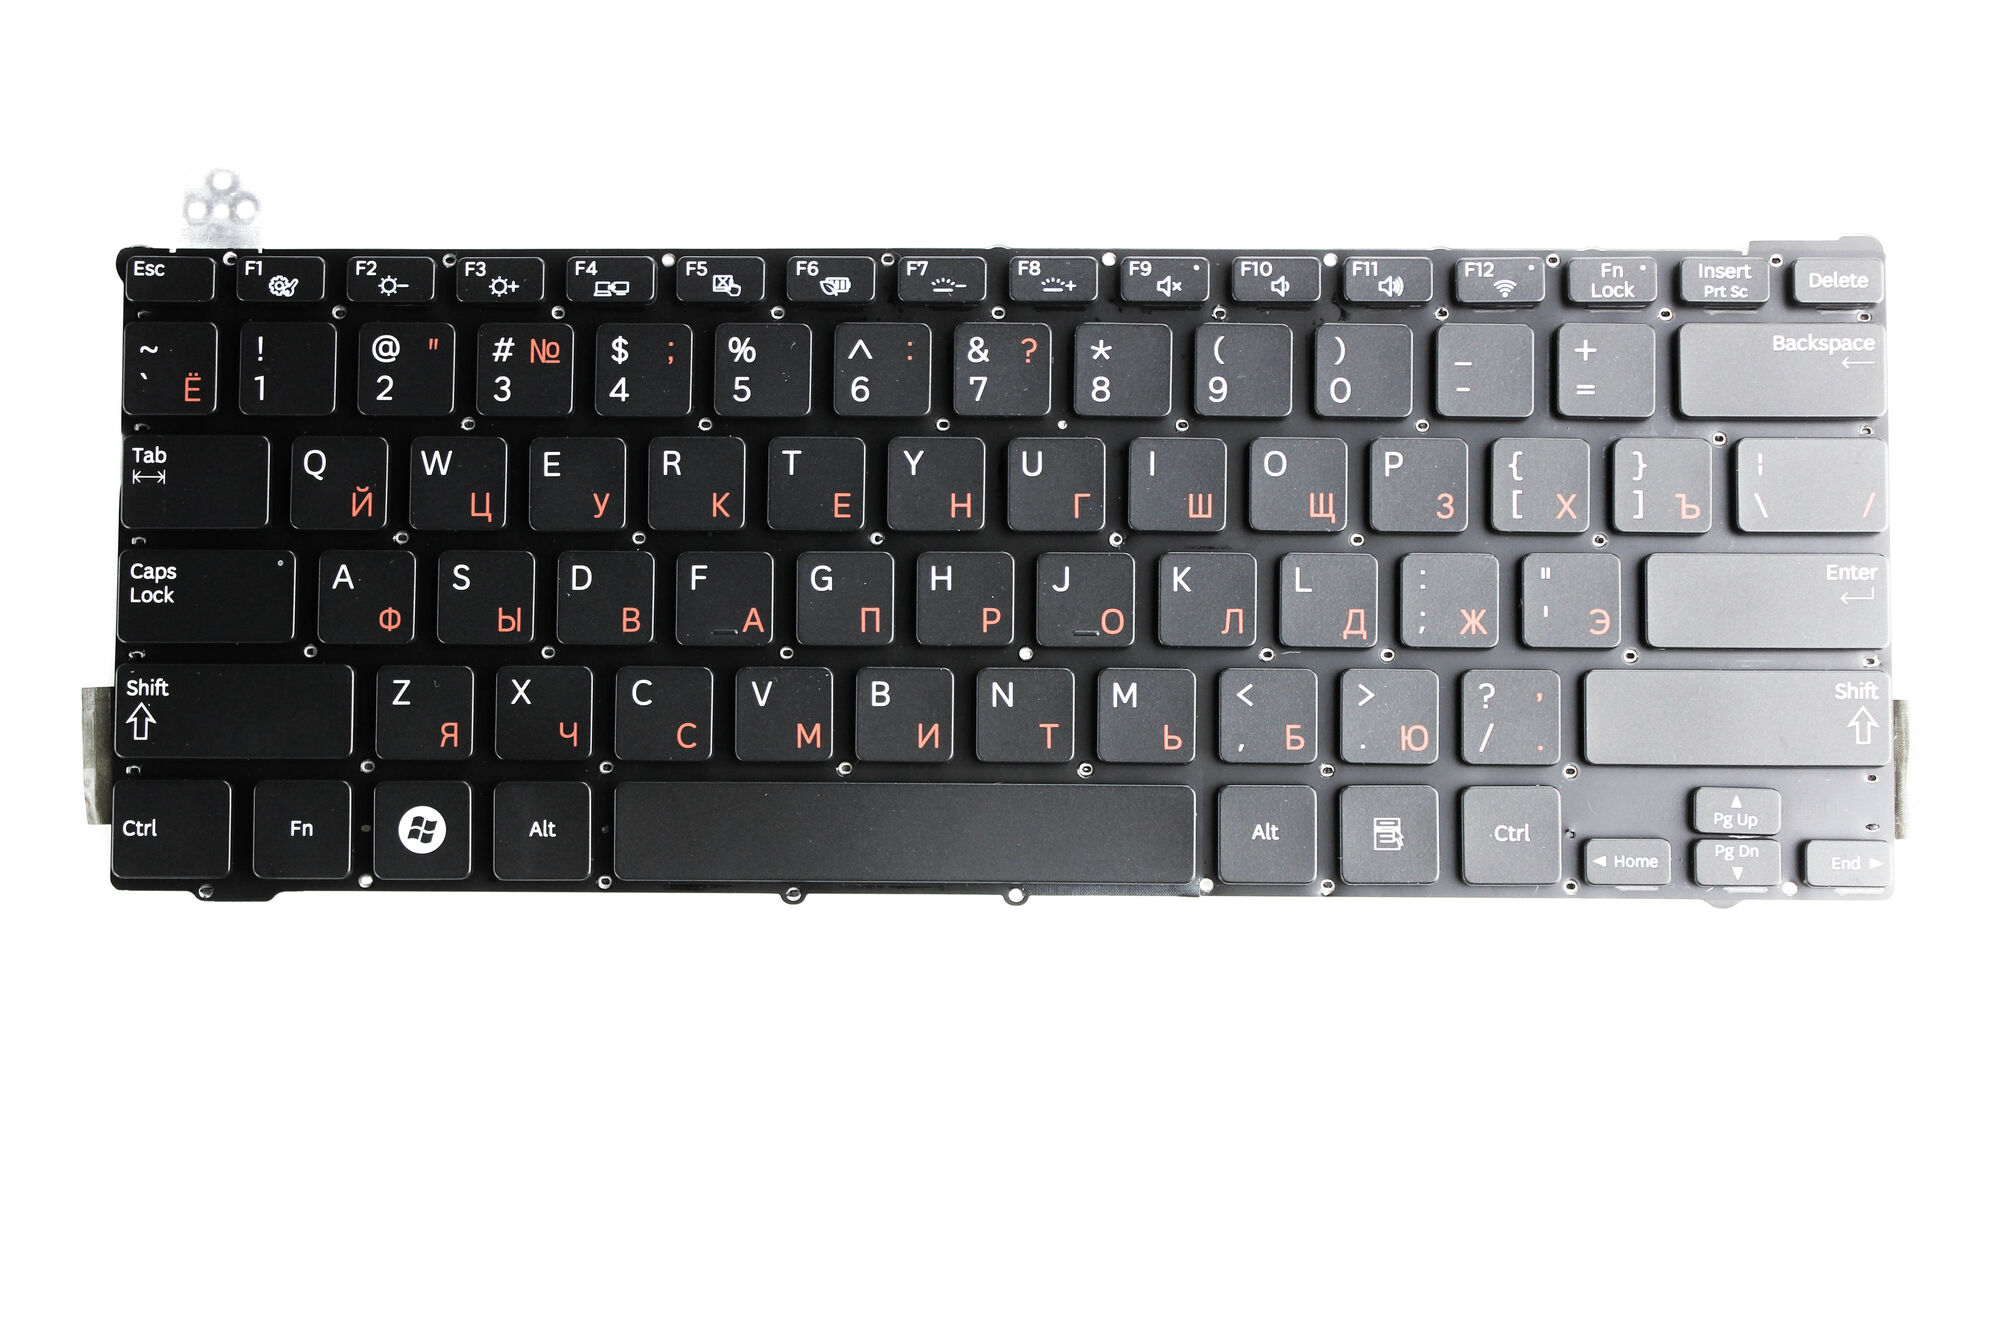 Клавиатура для ноутбука Samsung NP900X1B p/n: BA59-02907C, BA75-03221C